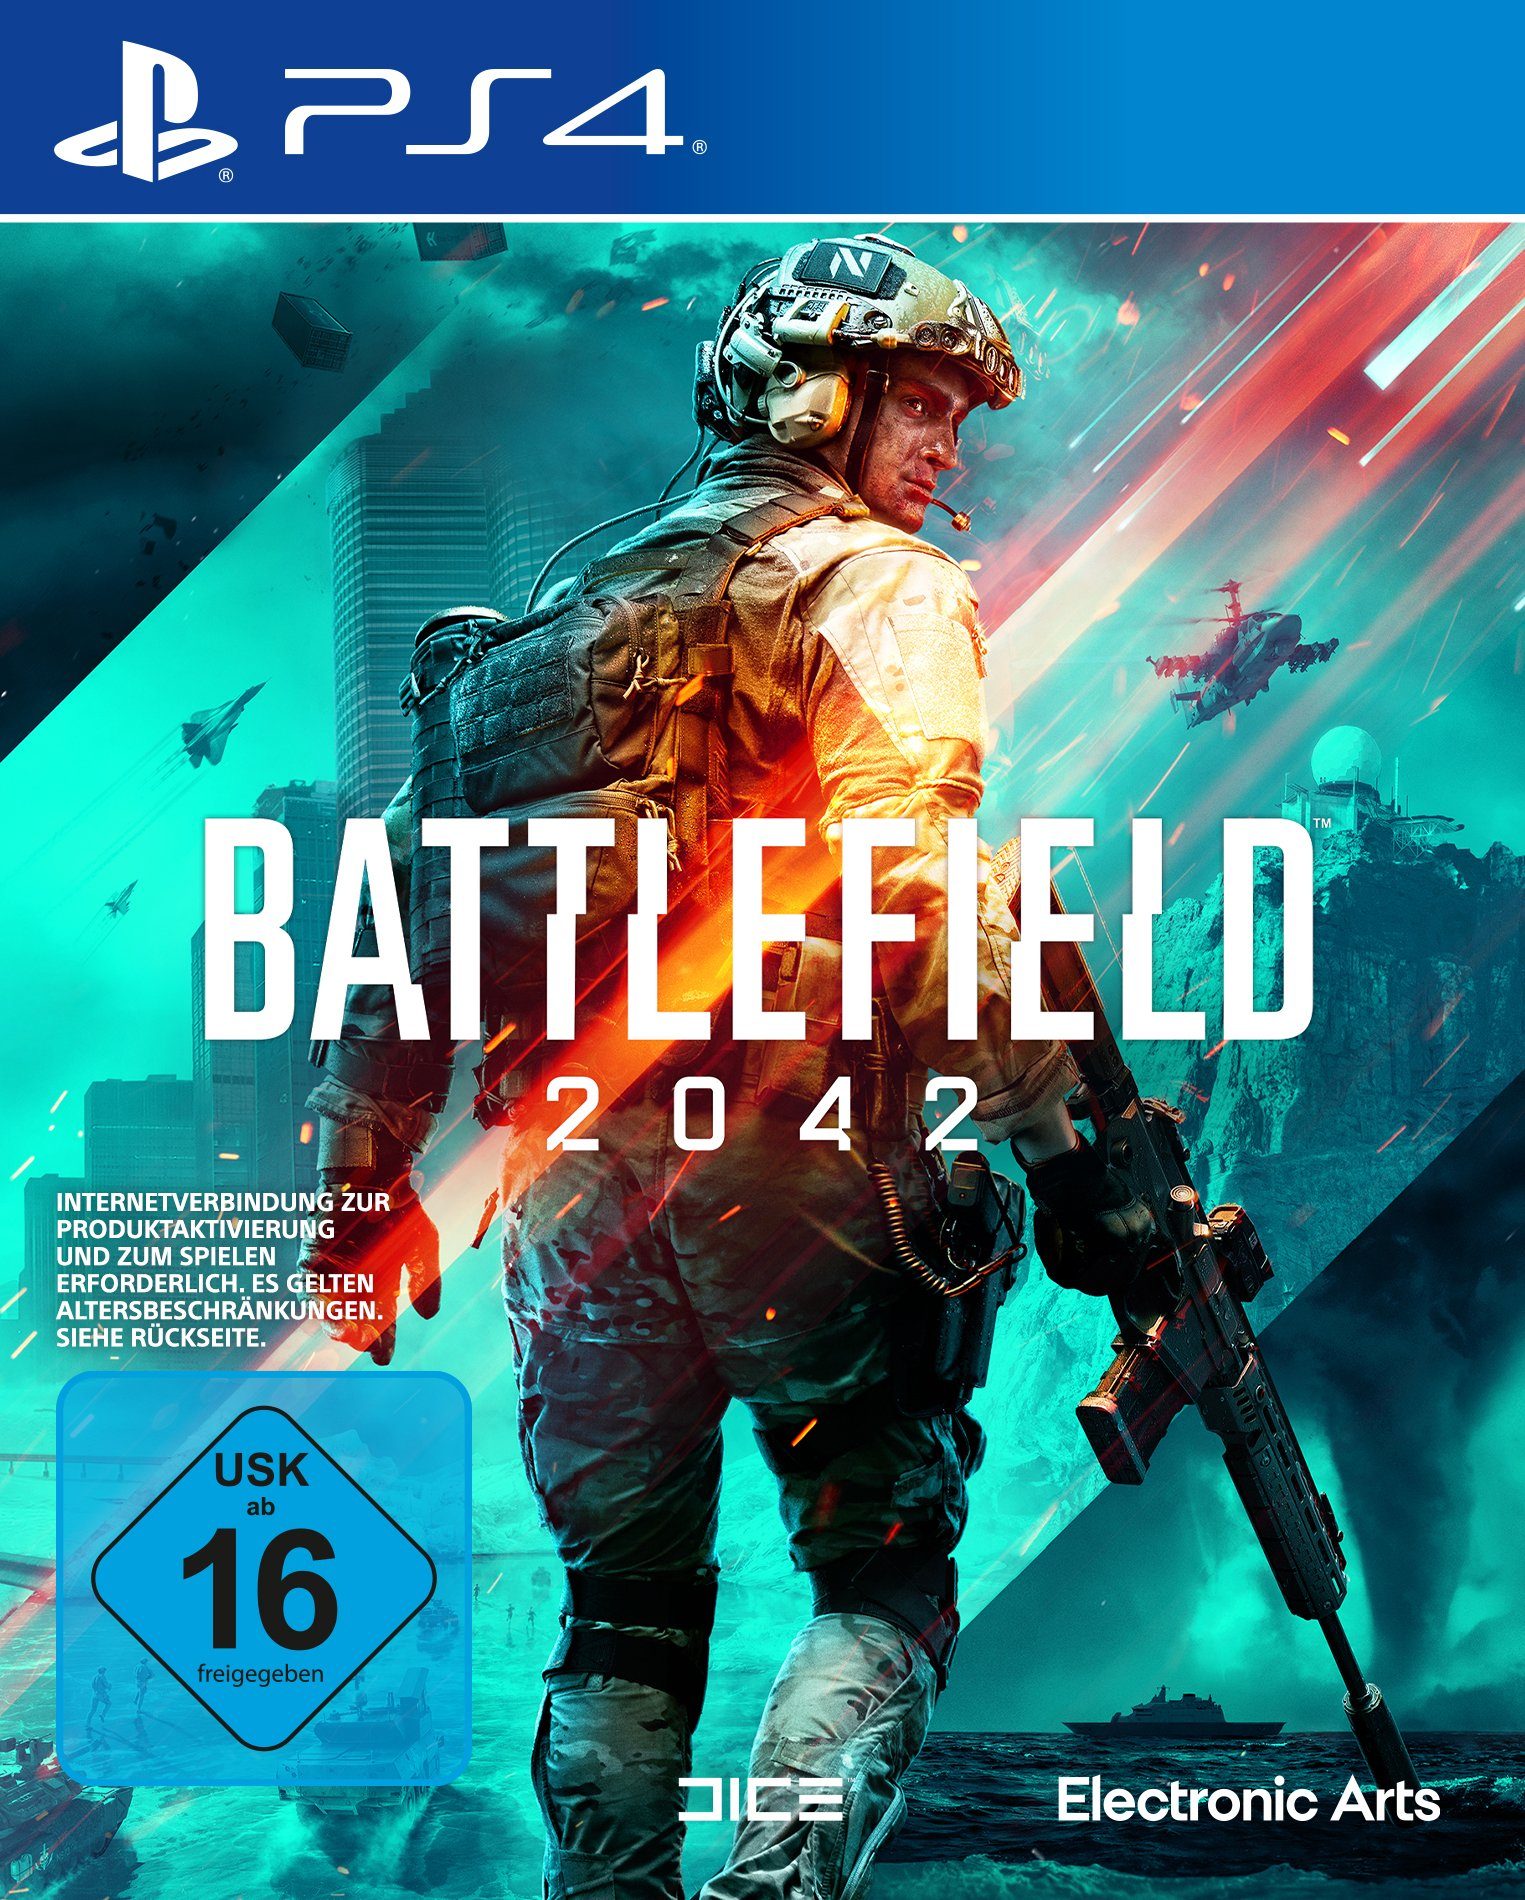 Electronic Battlefield PlayStation 2042 4 Arts